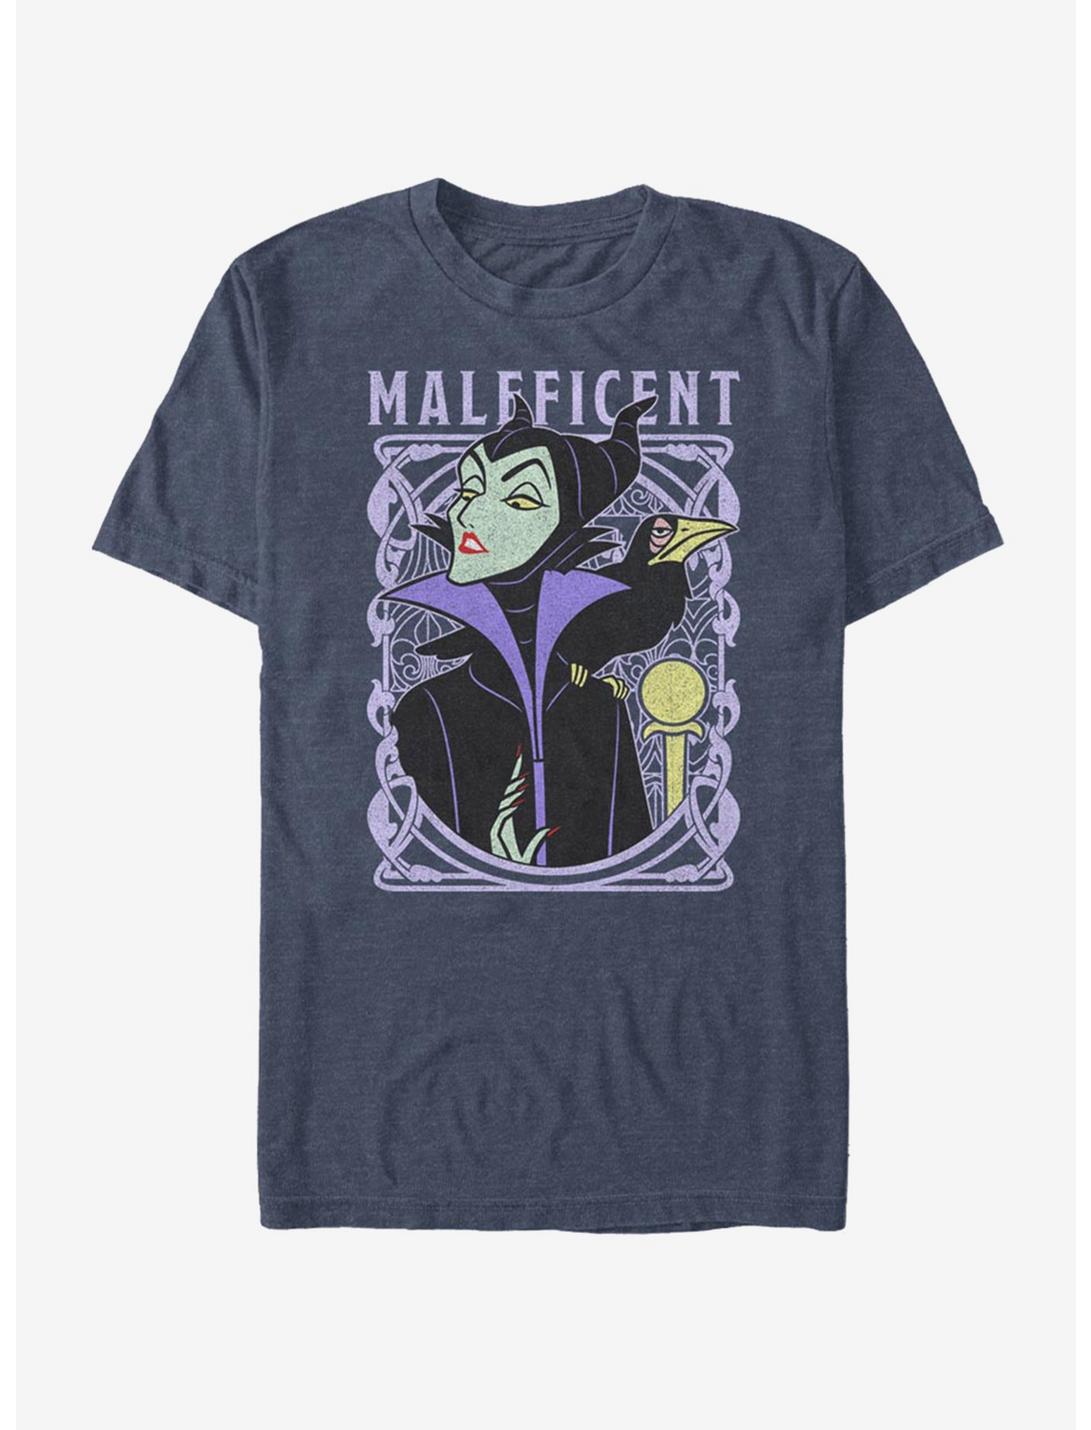 Disney Sleeping Beauty Maleficent Color T-Shirt, NAVY HTR, hi-res